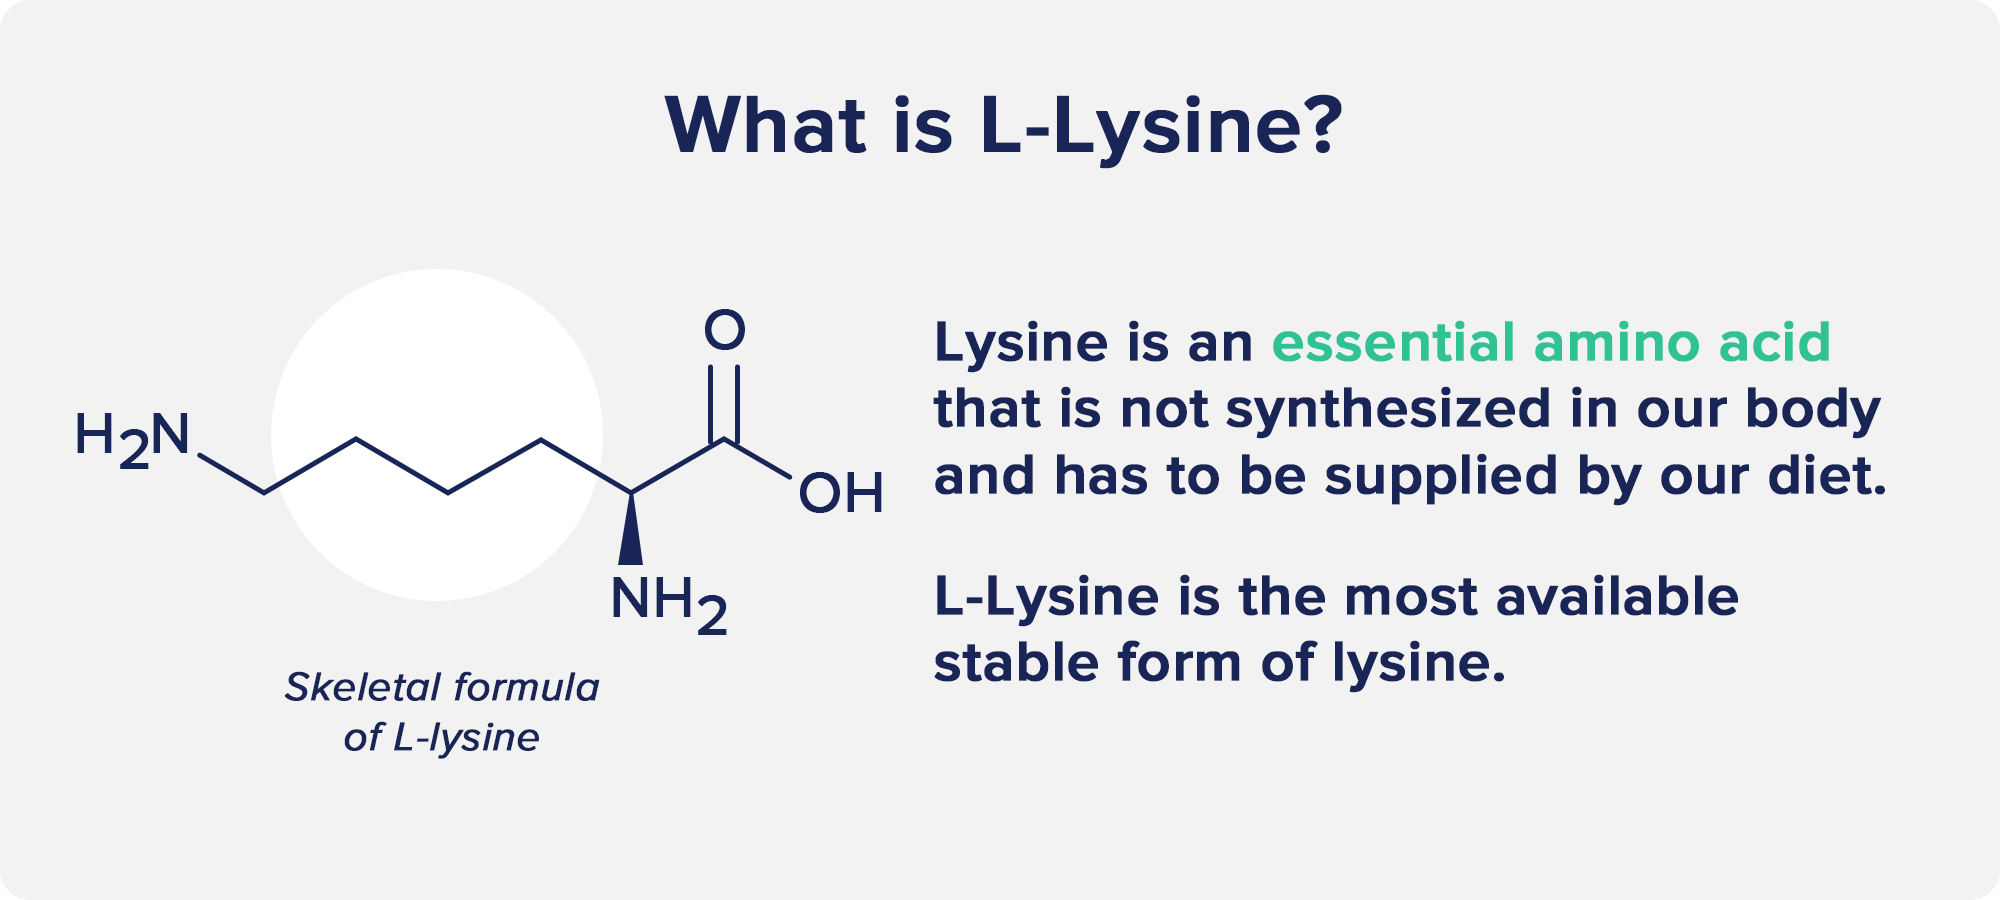 What is L-Lysine